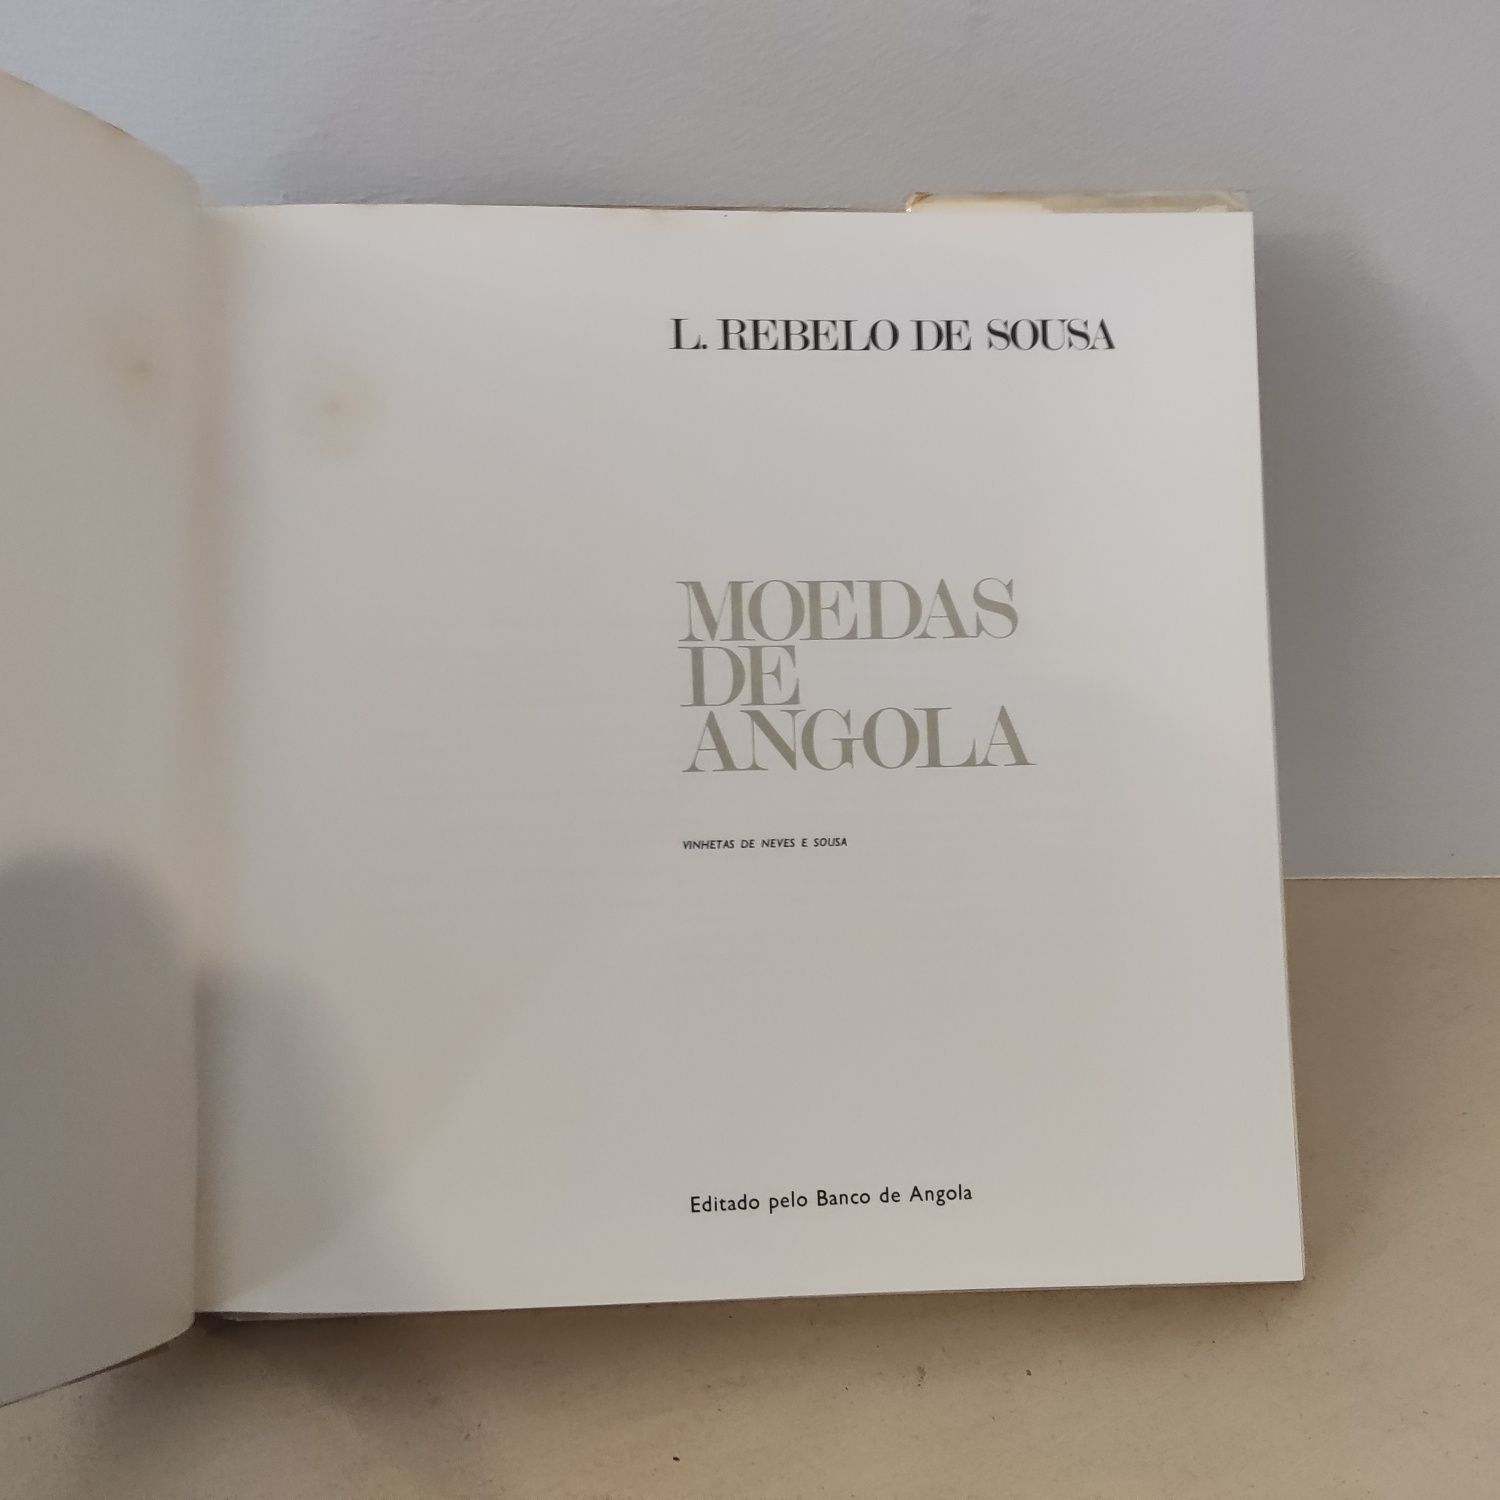 Livro Moedas de Angola de L. Rebelo de Sousa